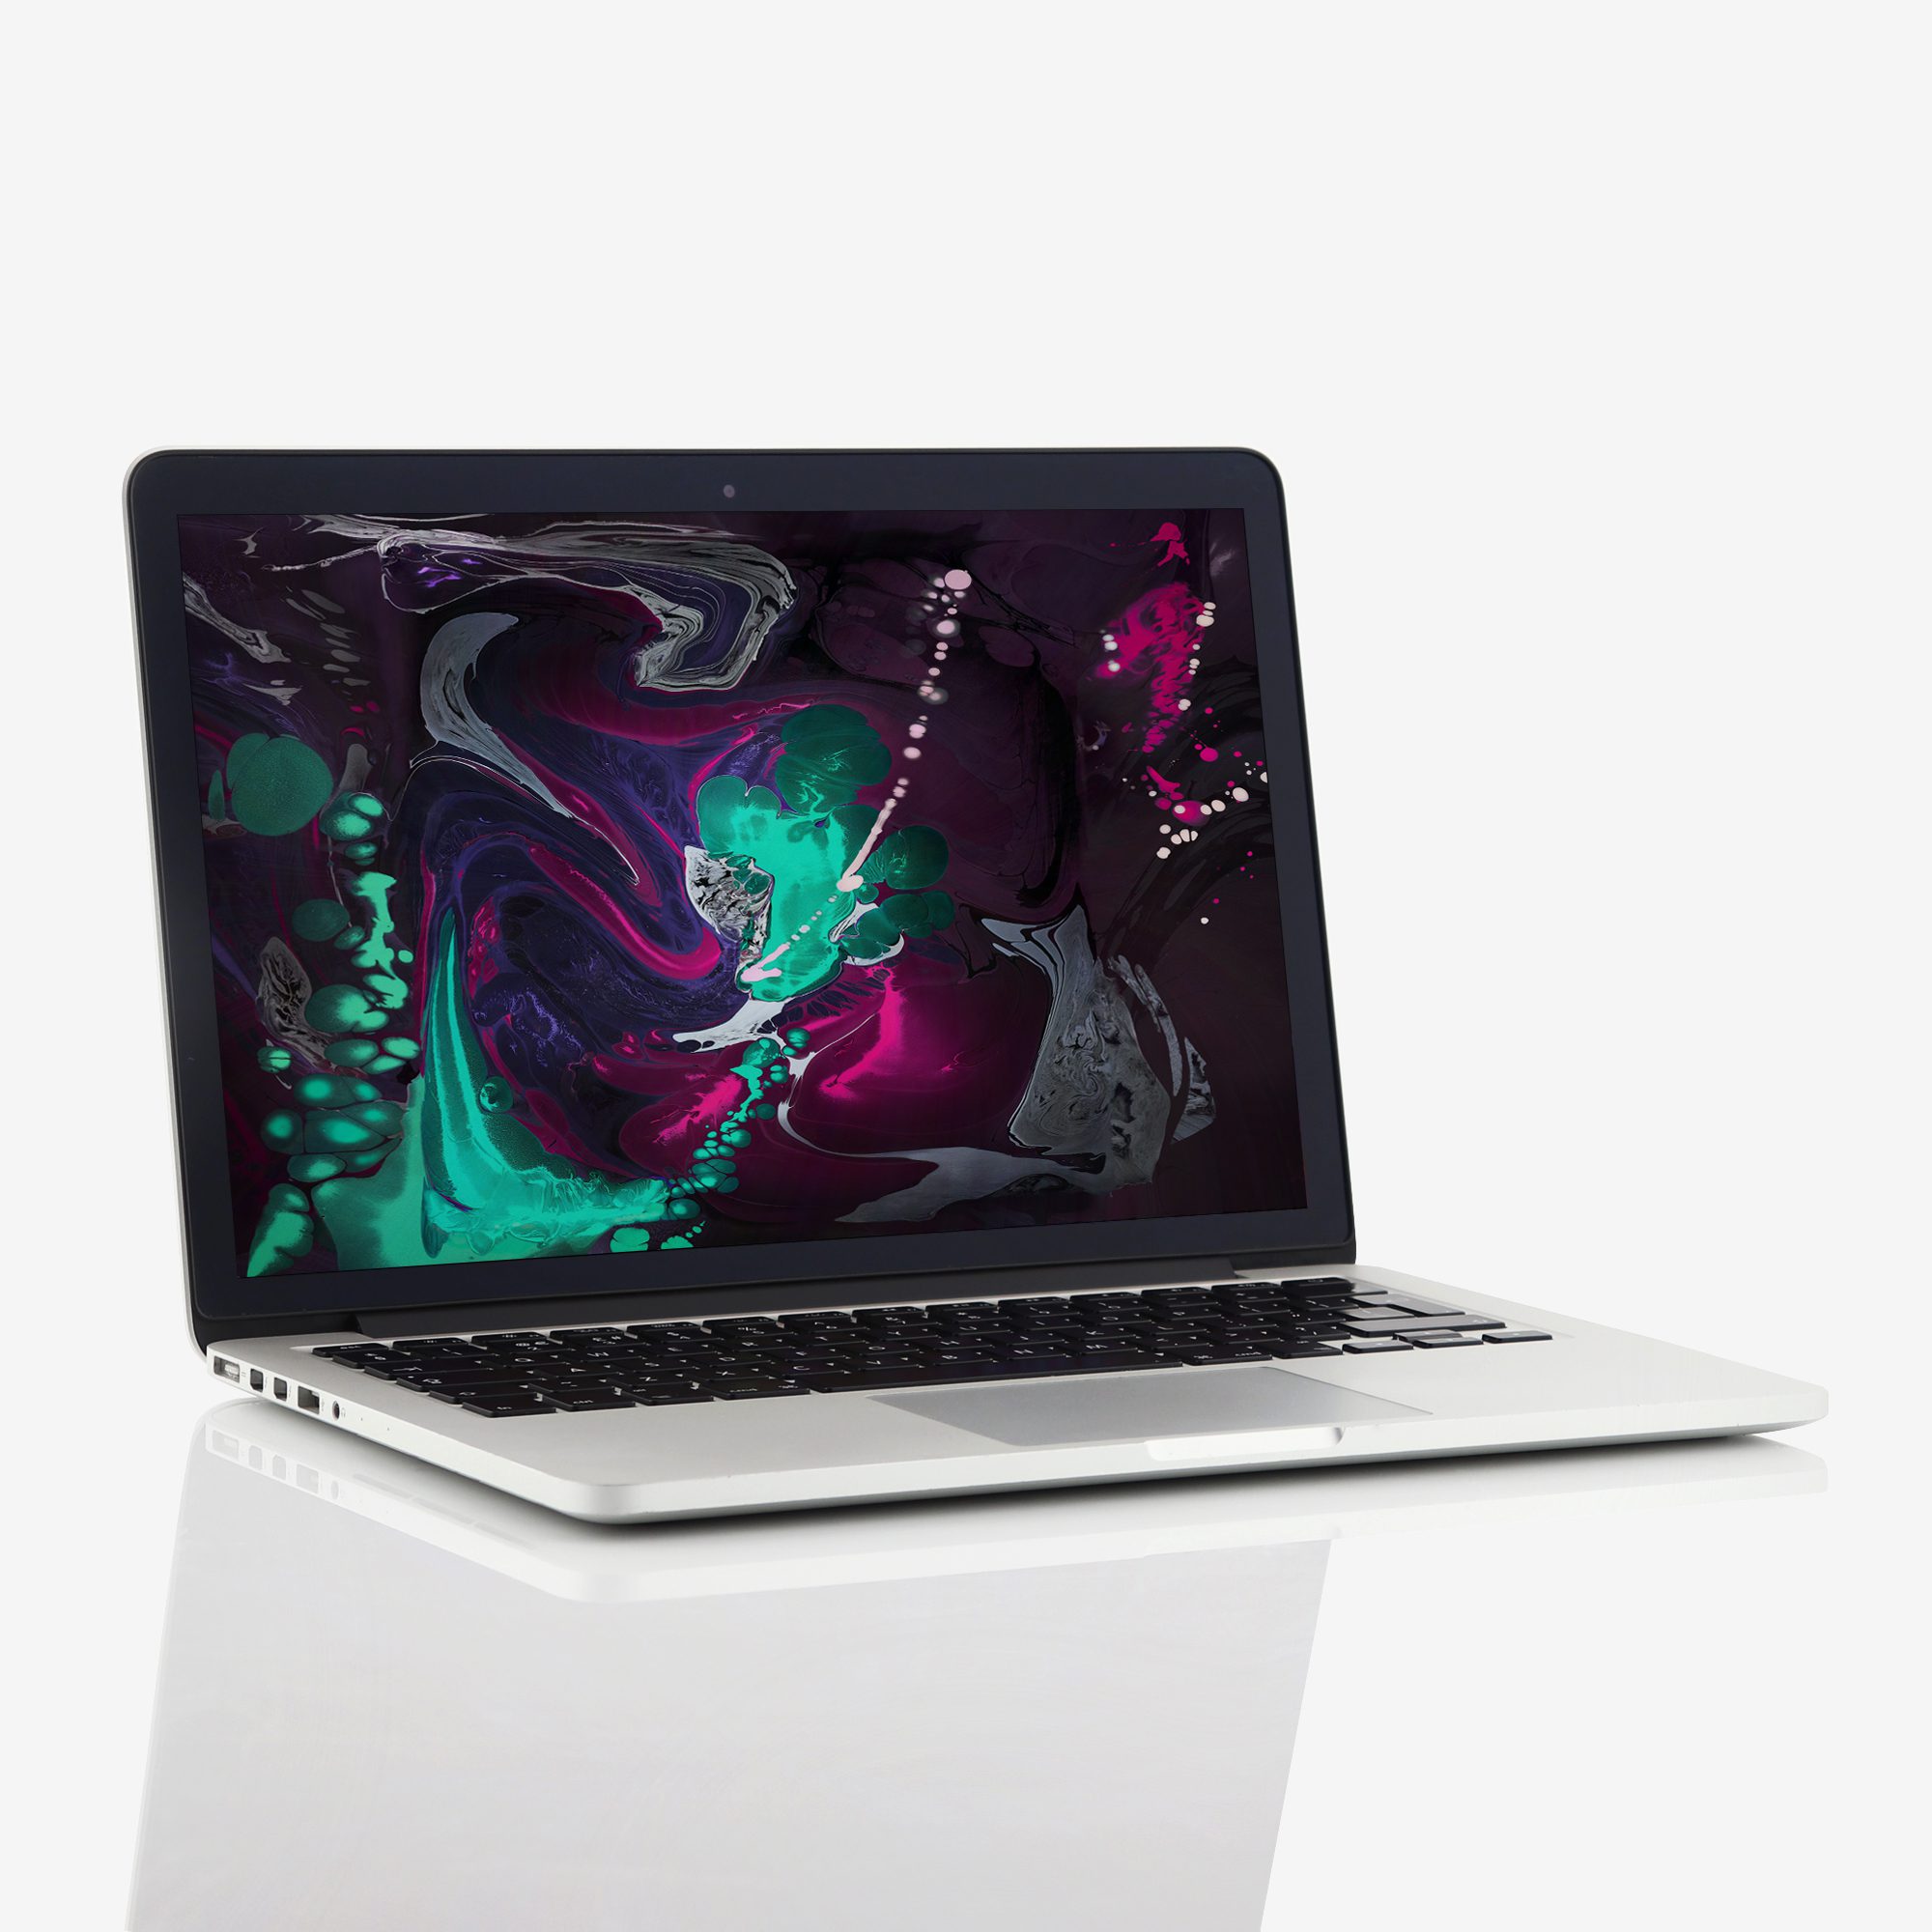 1 x Apple MacBook Pro Retina 13 Inch Intel Core i5 2.80 GHz (2014)